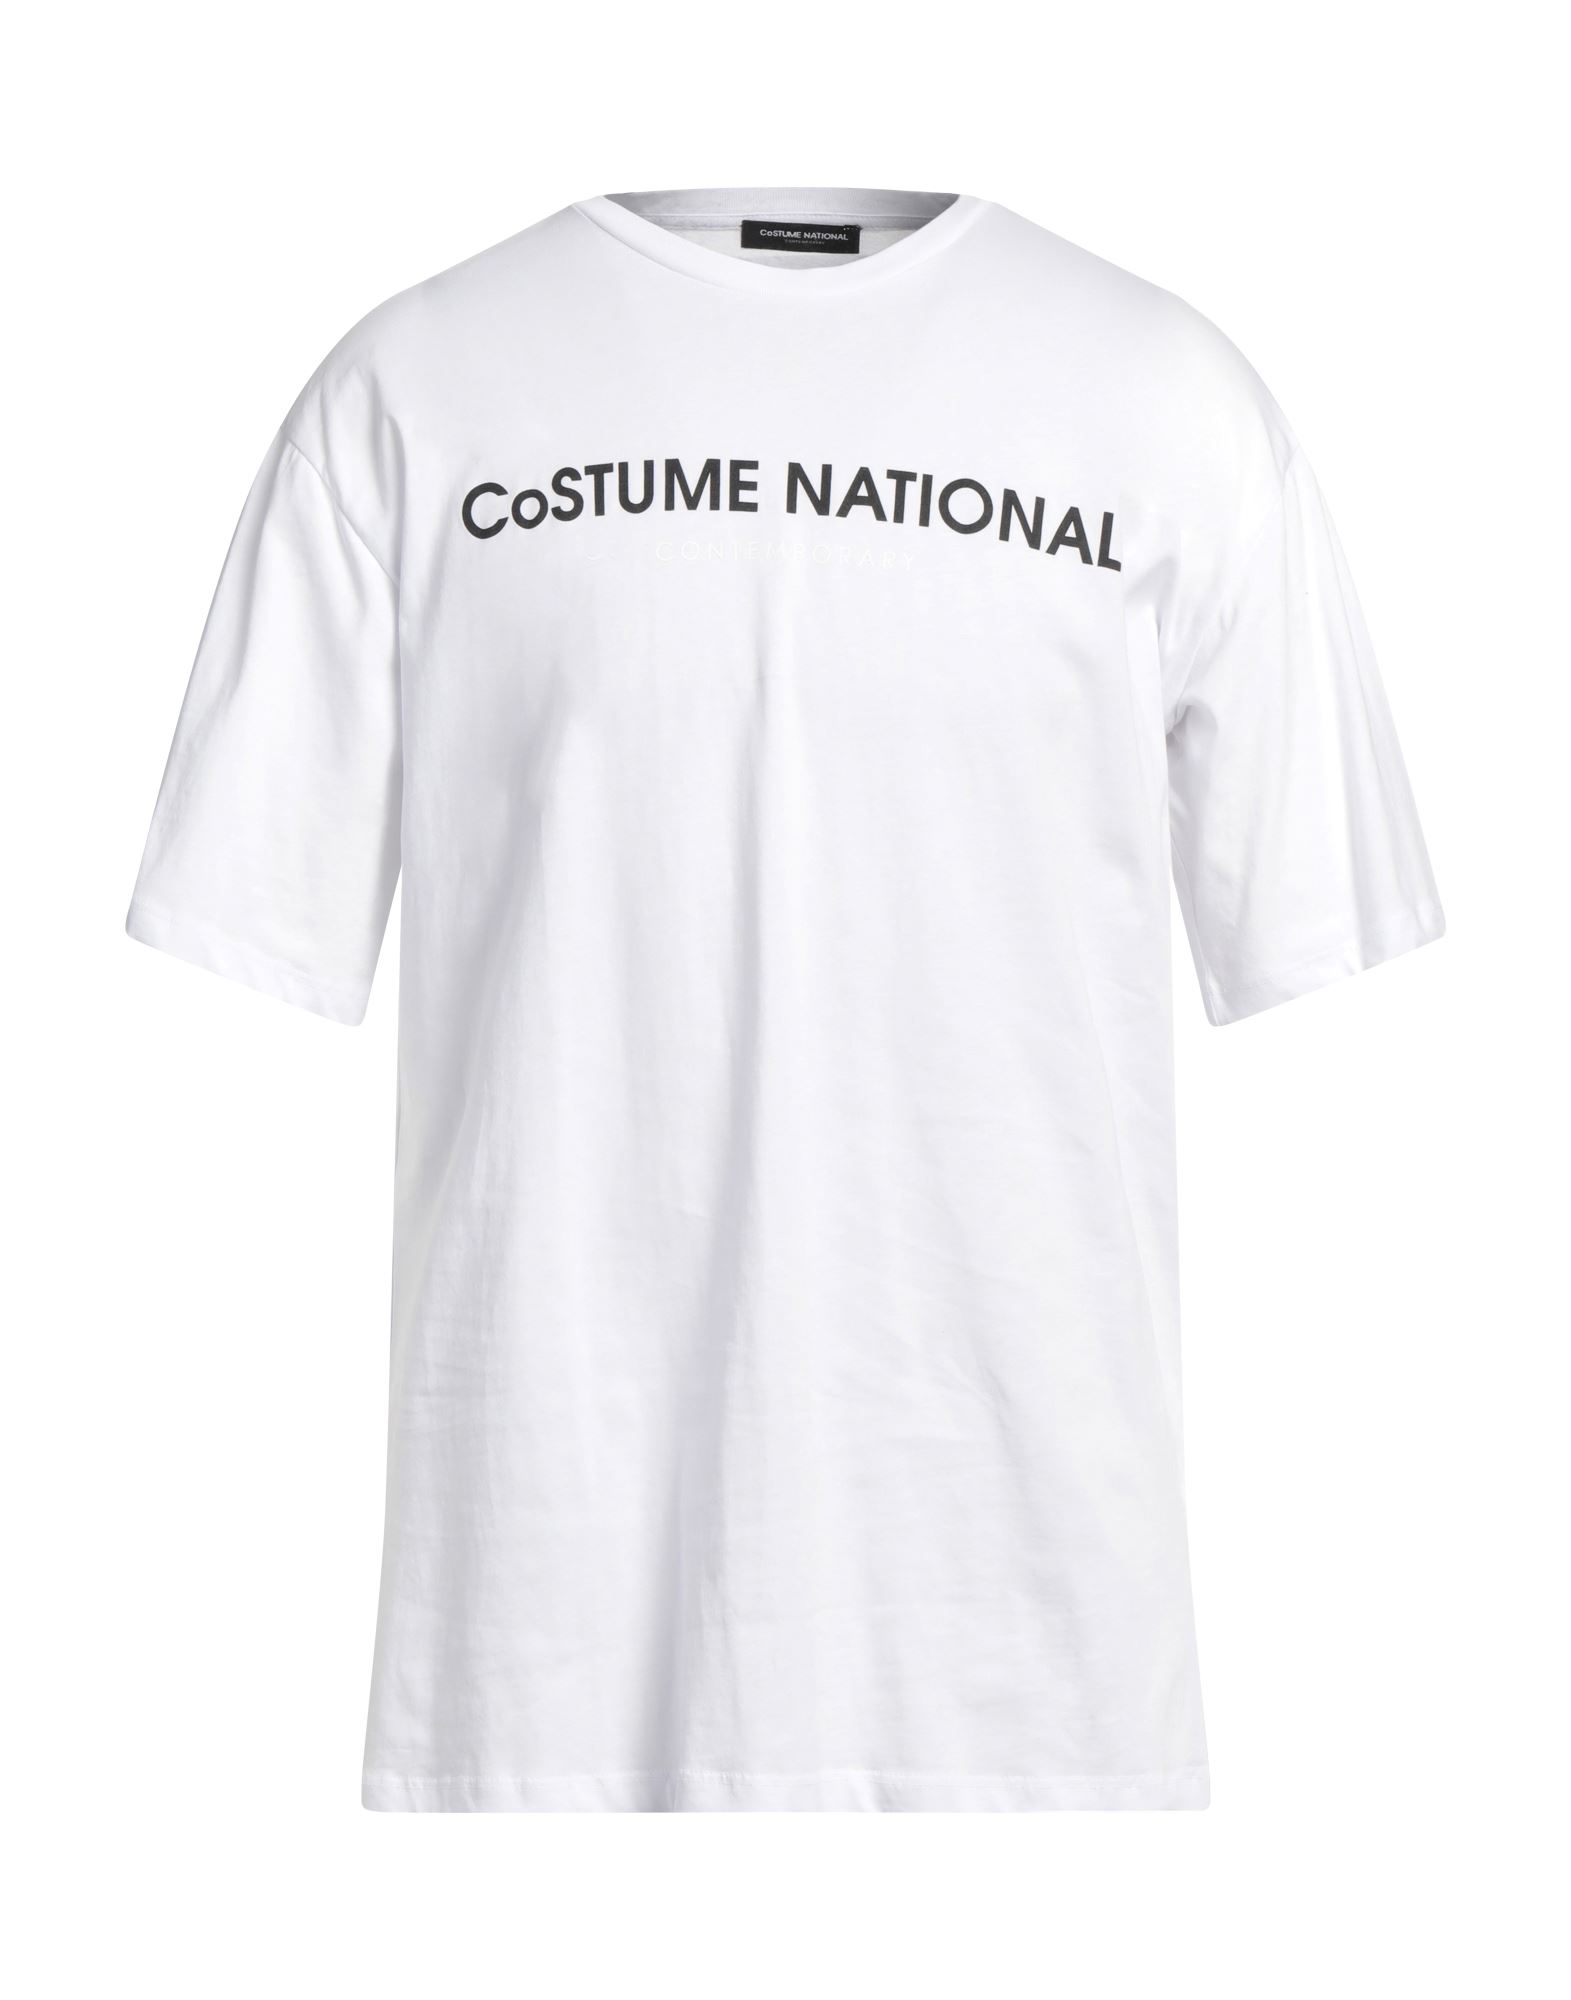 COSTUME NATIONAL COSTUME NATIONAL MAN T-SHIRT WHITE SIZE XL COTTON